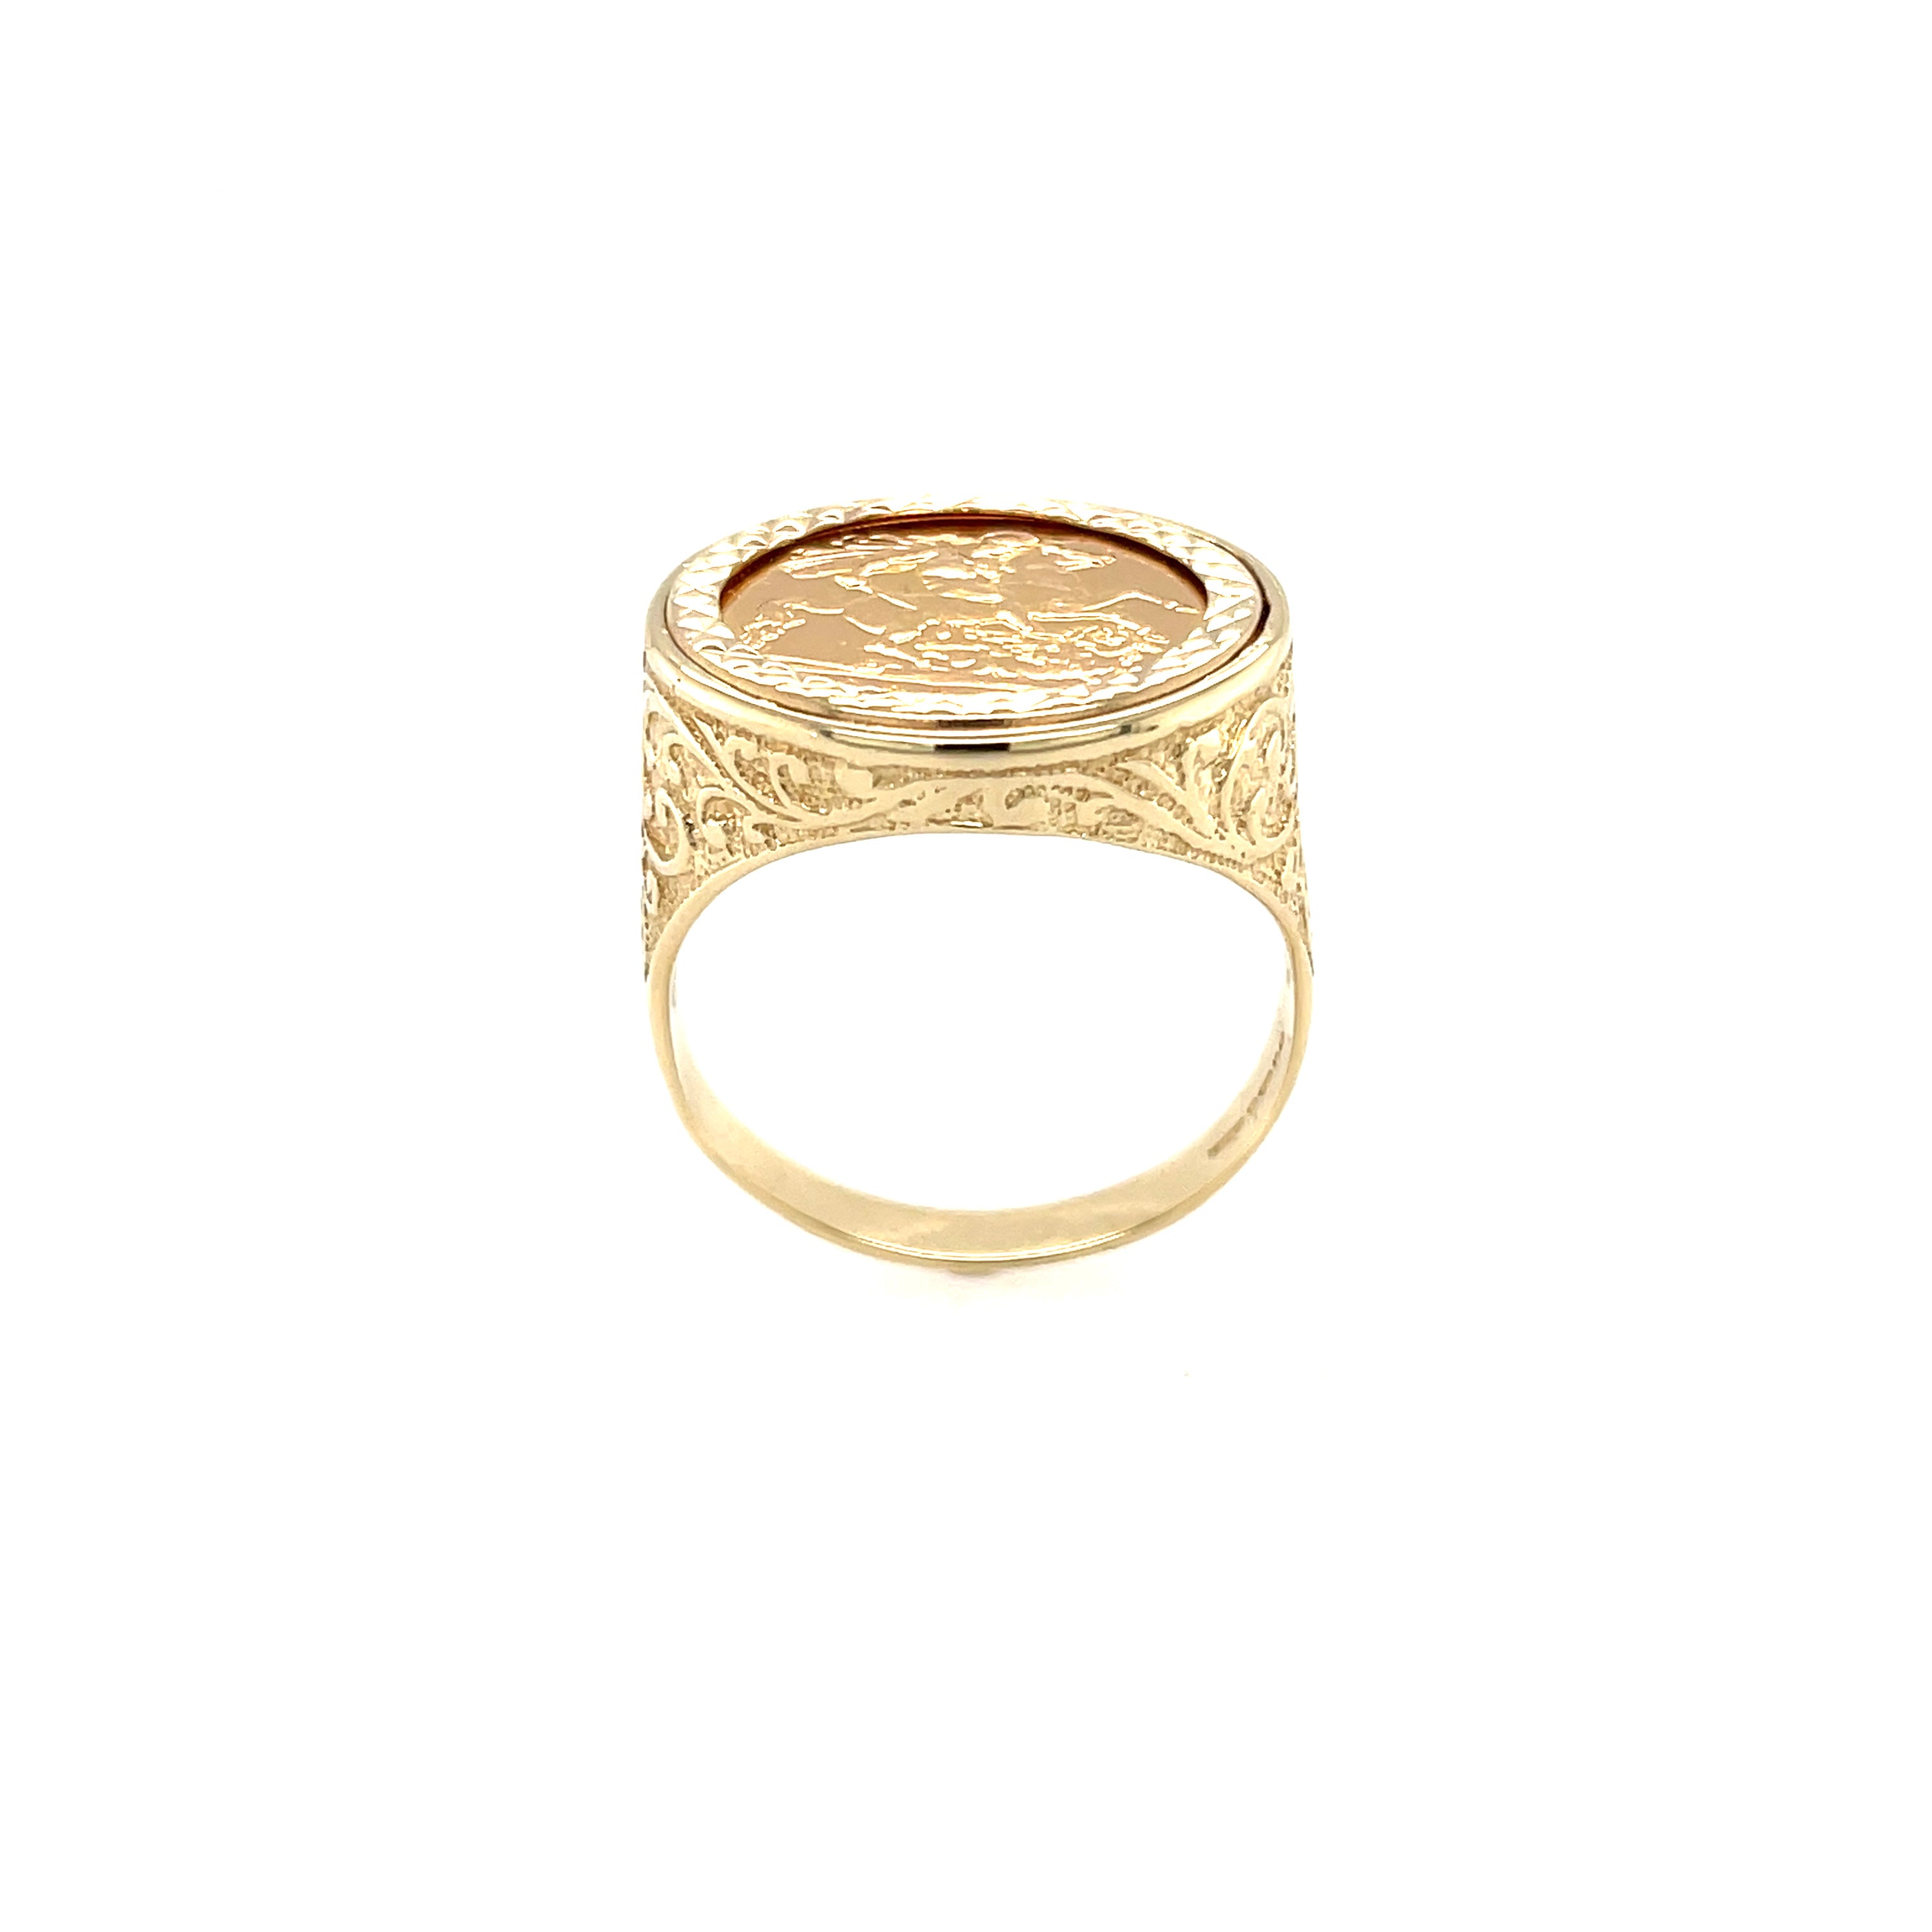 1982 Elizabeth II Half Sovereign Ring Size X SOLD